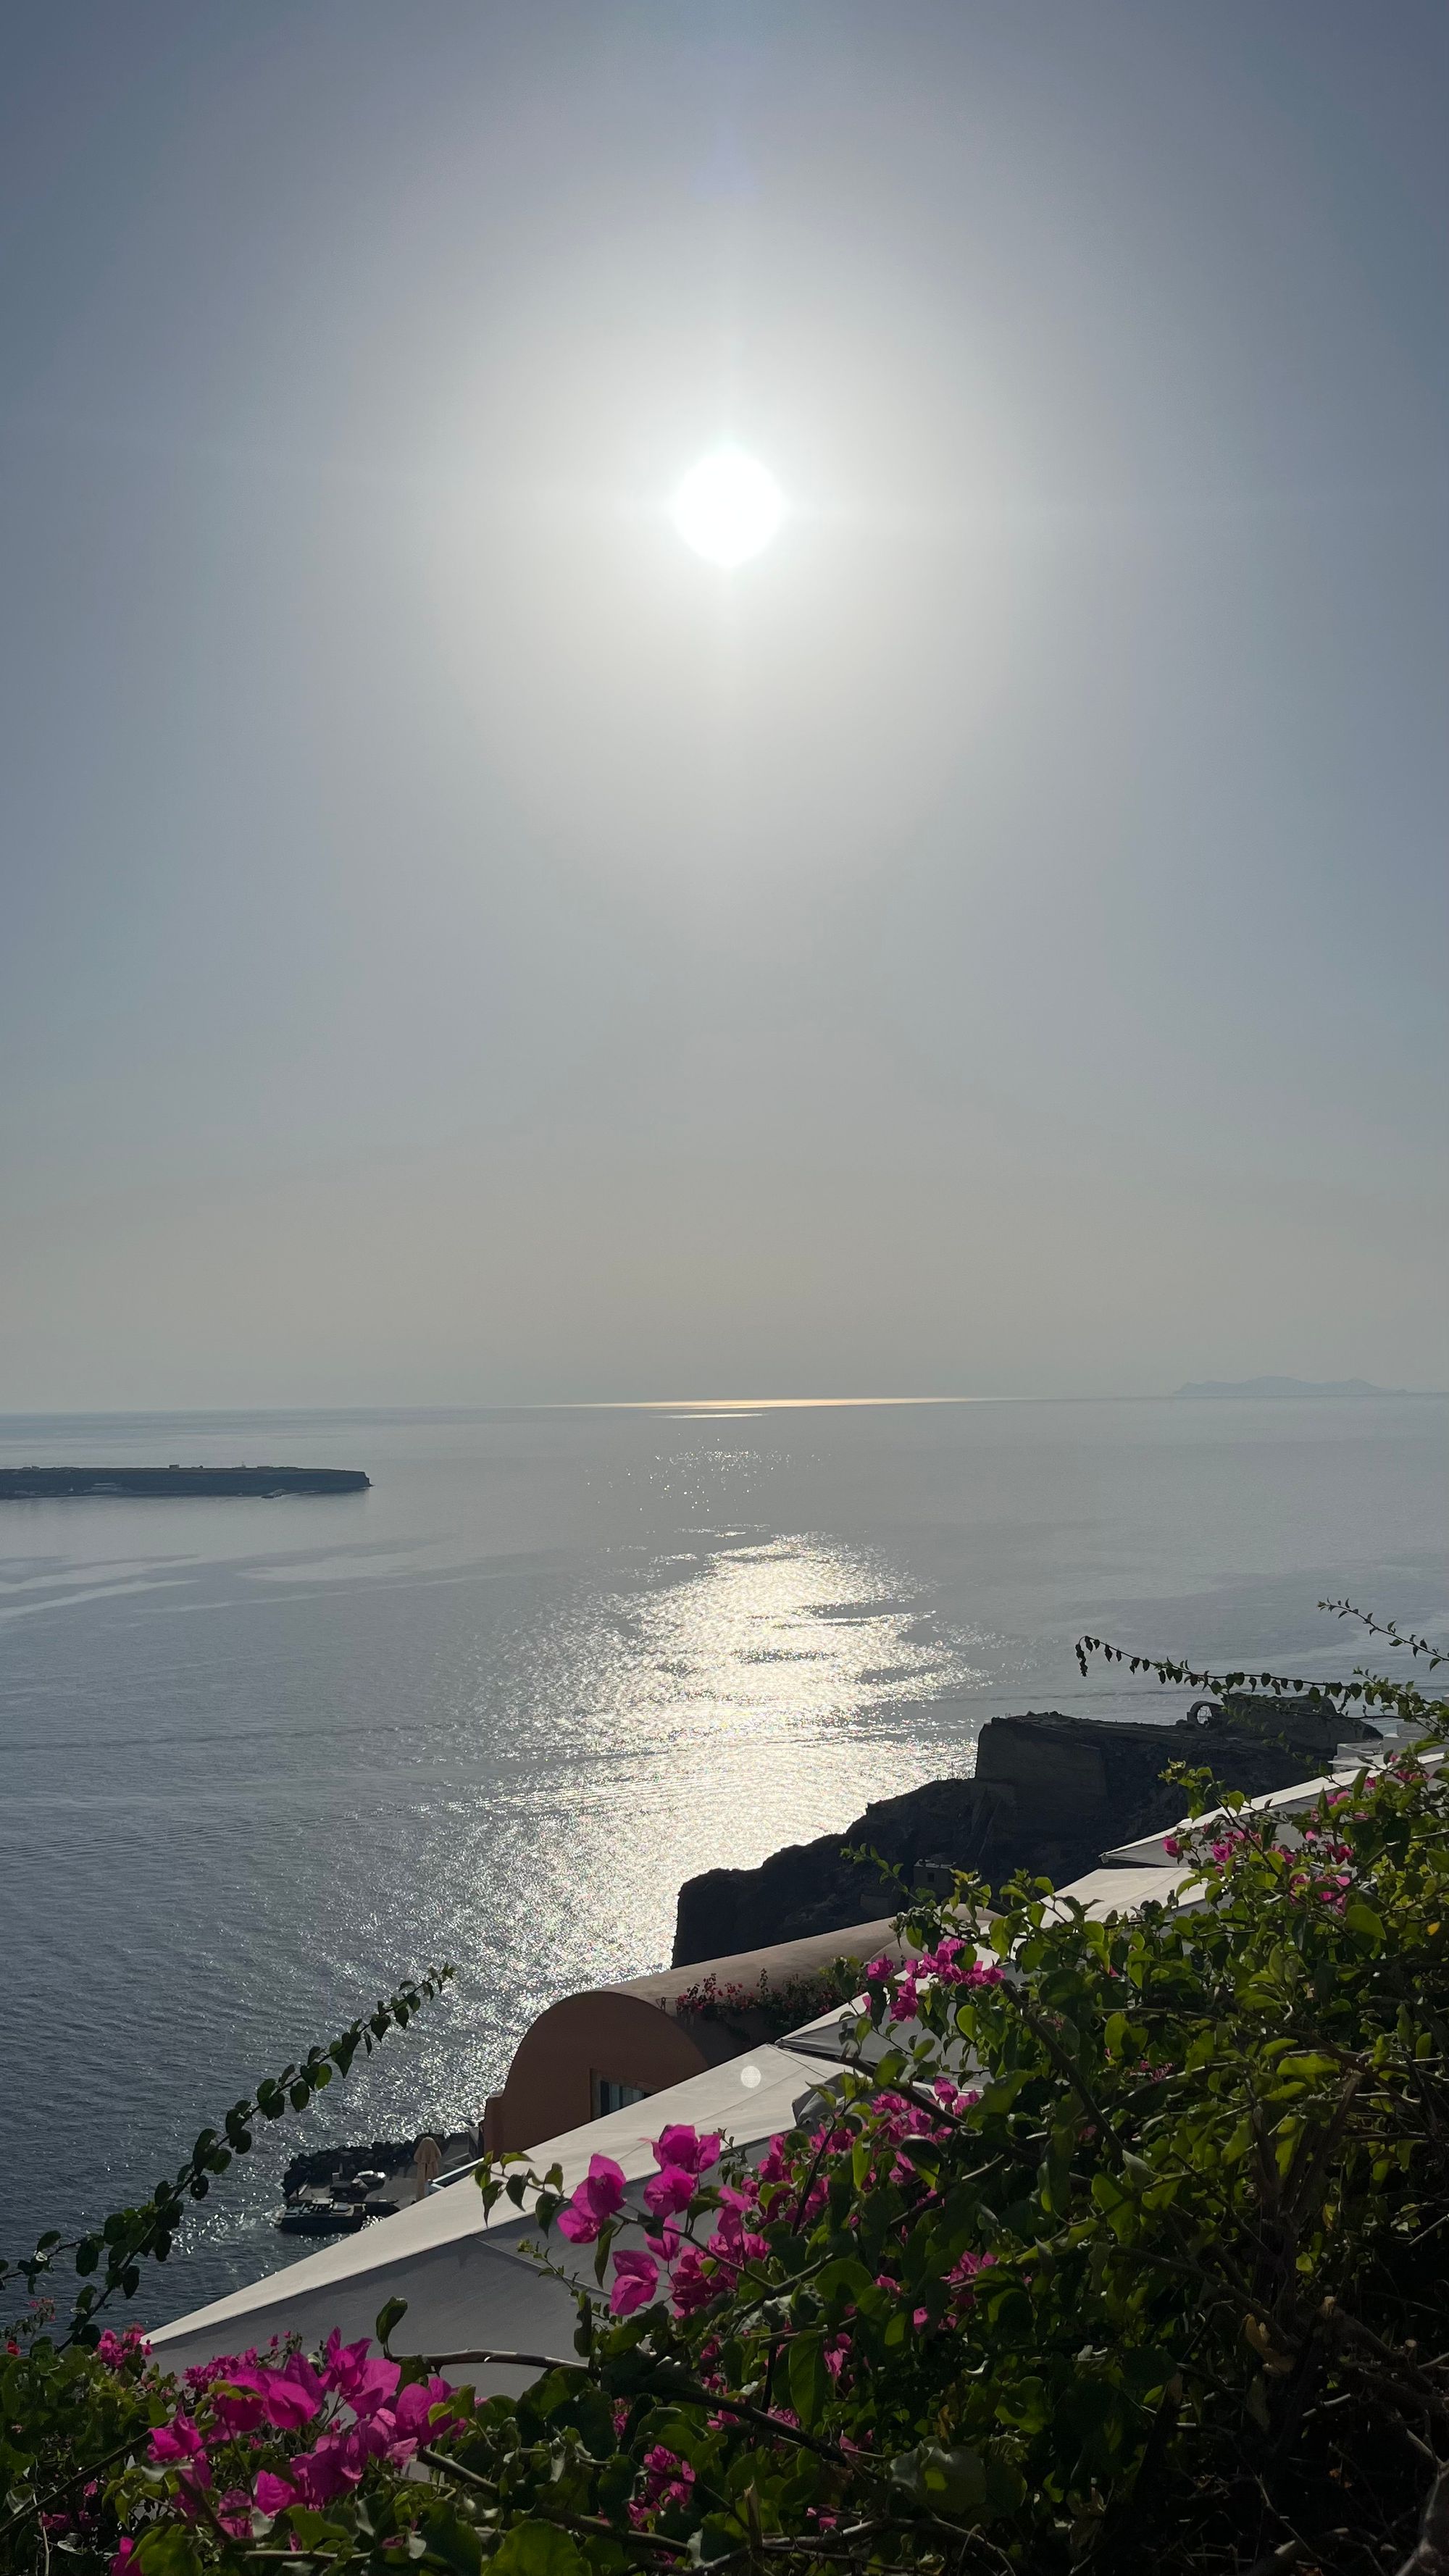 Our Anniversary Getaway to Breathtaking Santorini